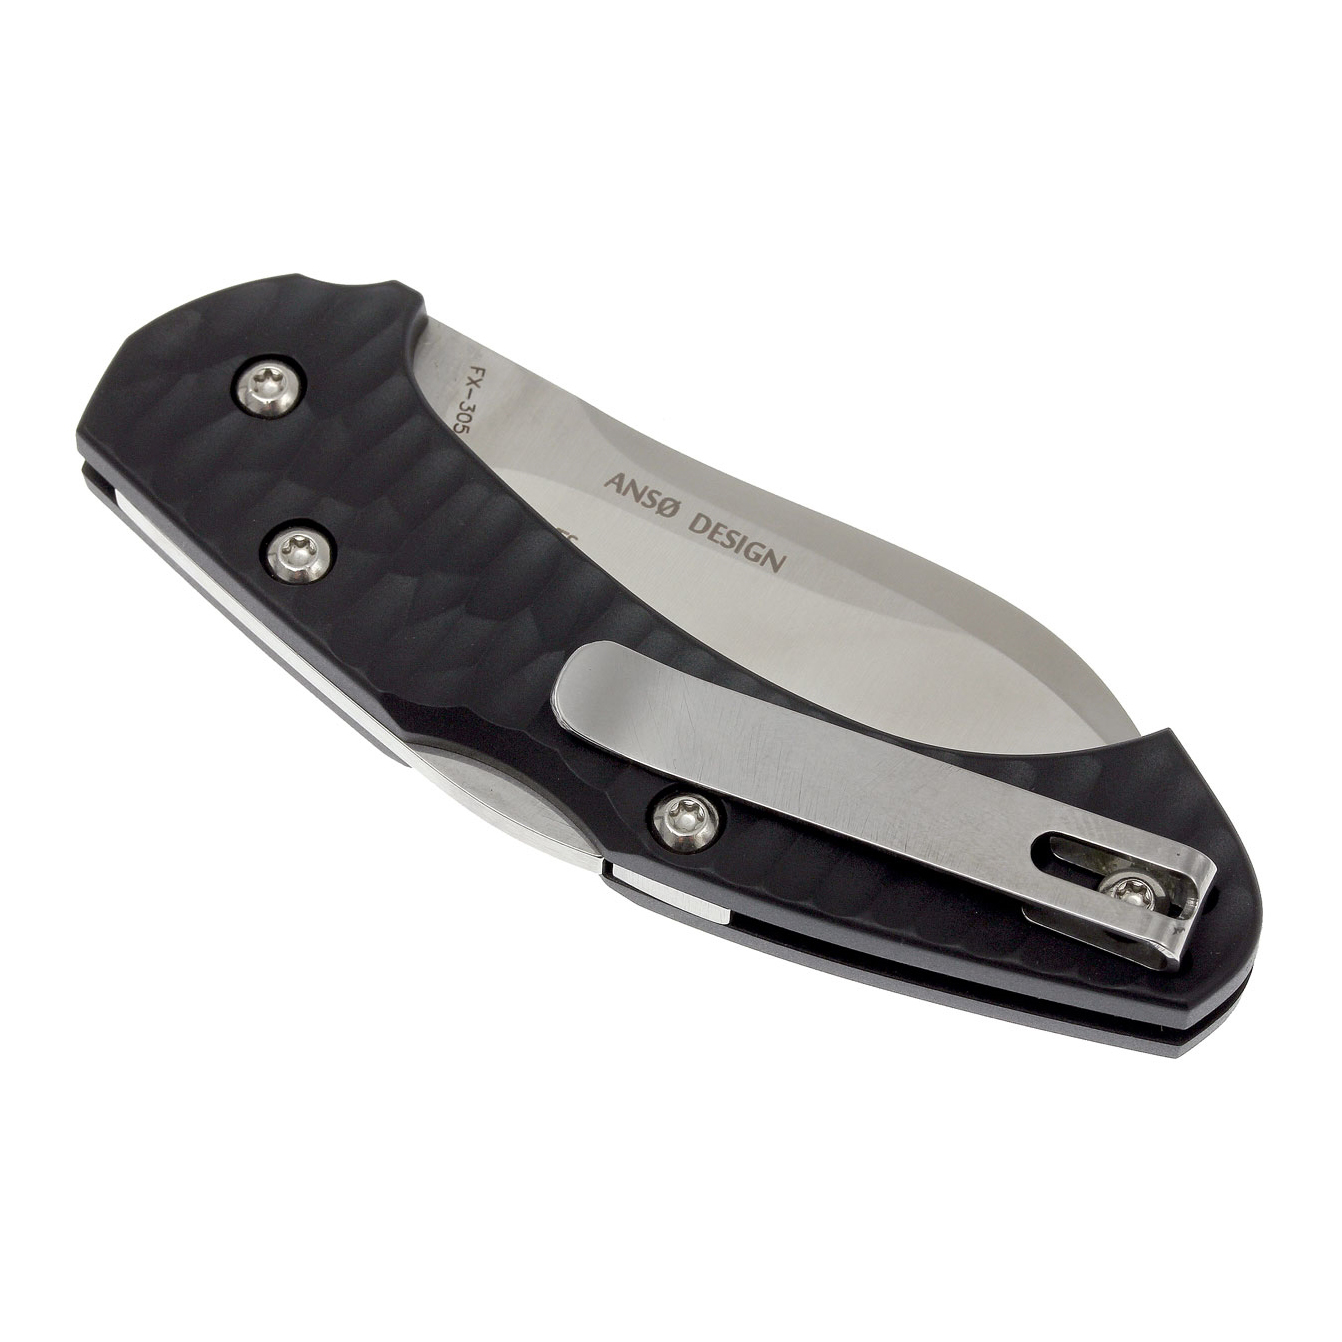 Складной нож Fox Jens Anso Design, сталь N690, рукоять термопластик FRN, черный - фото 9